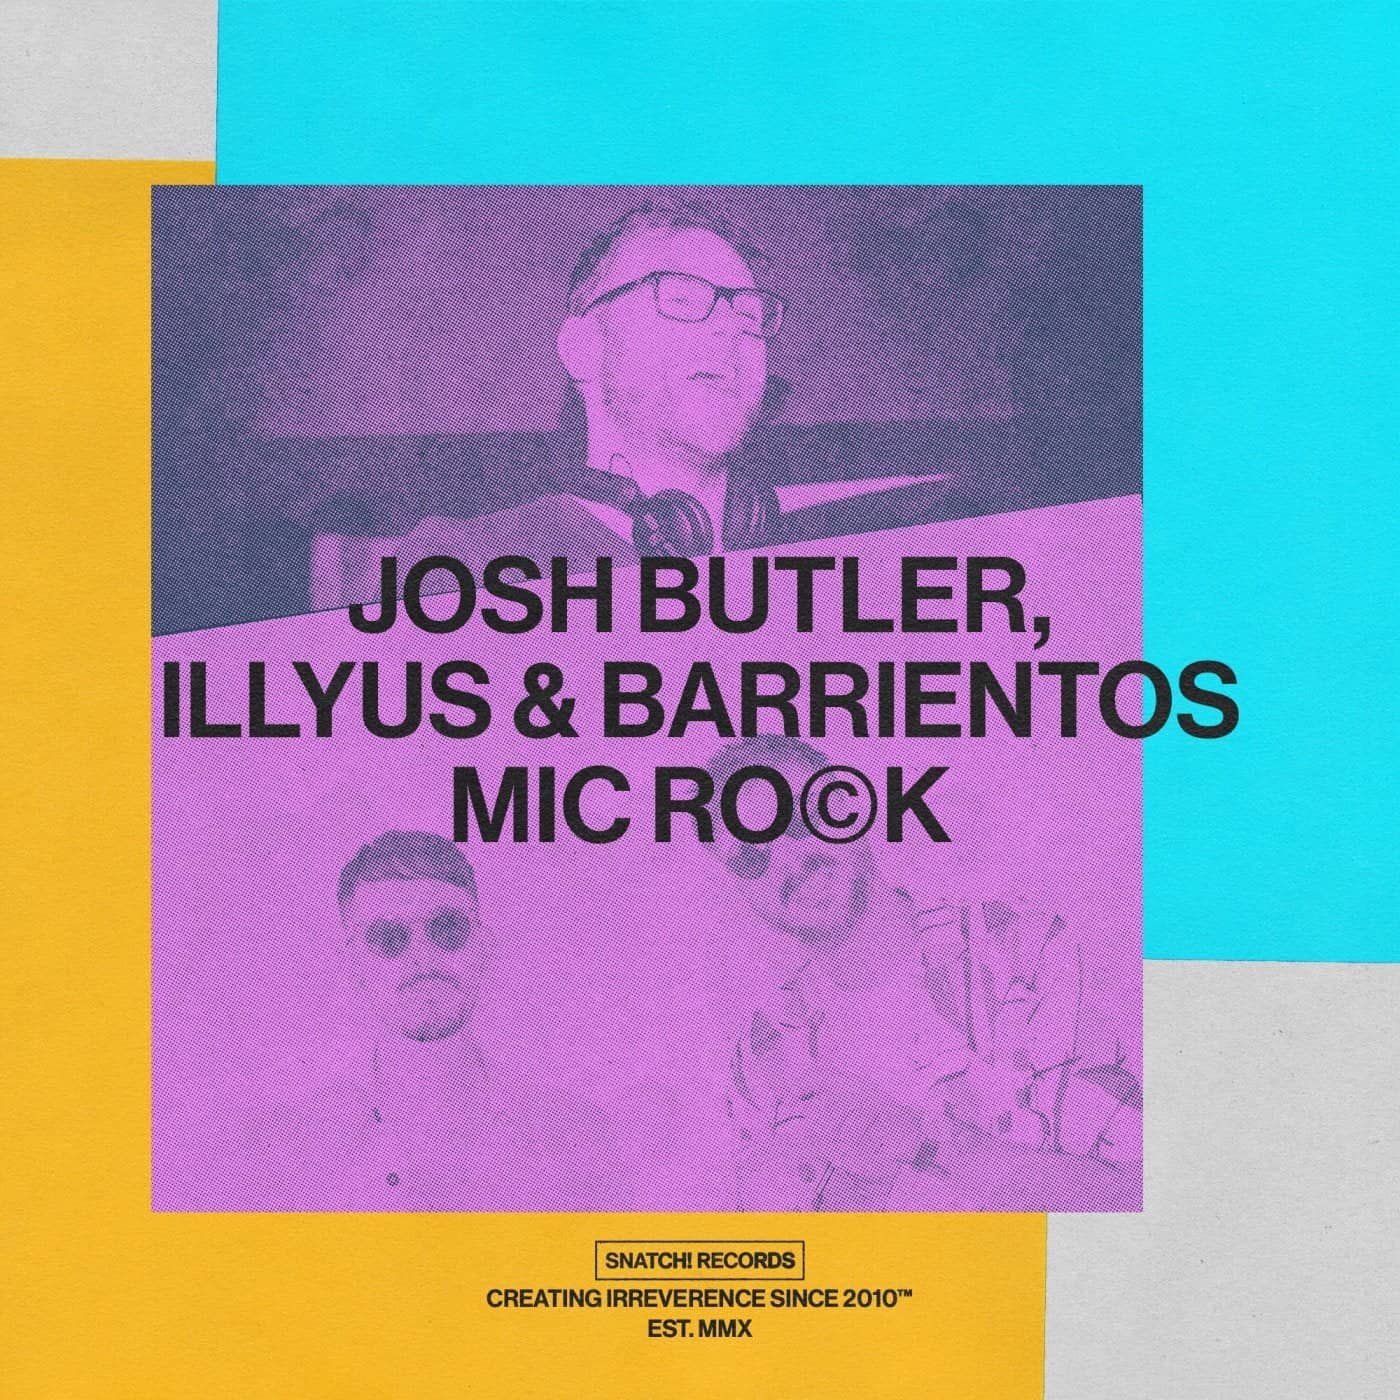 Download Barrientos, Josh Butler, Illyus - Mic Rock on Electrobuzz